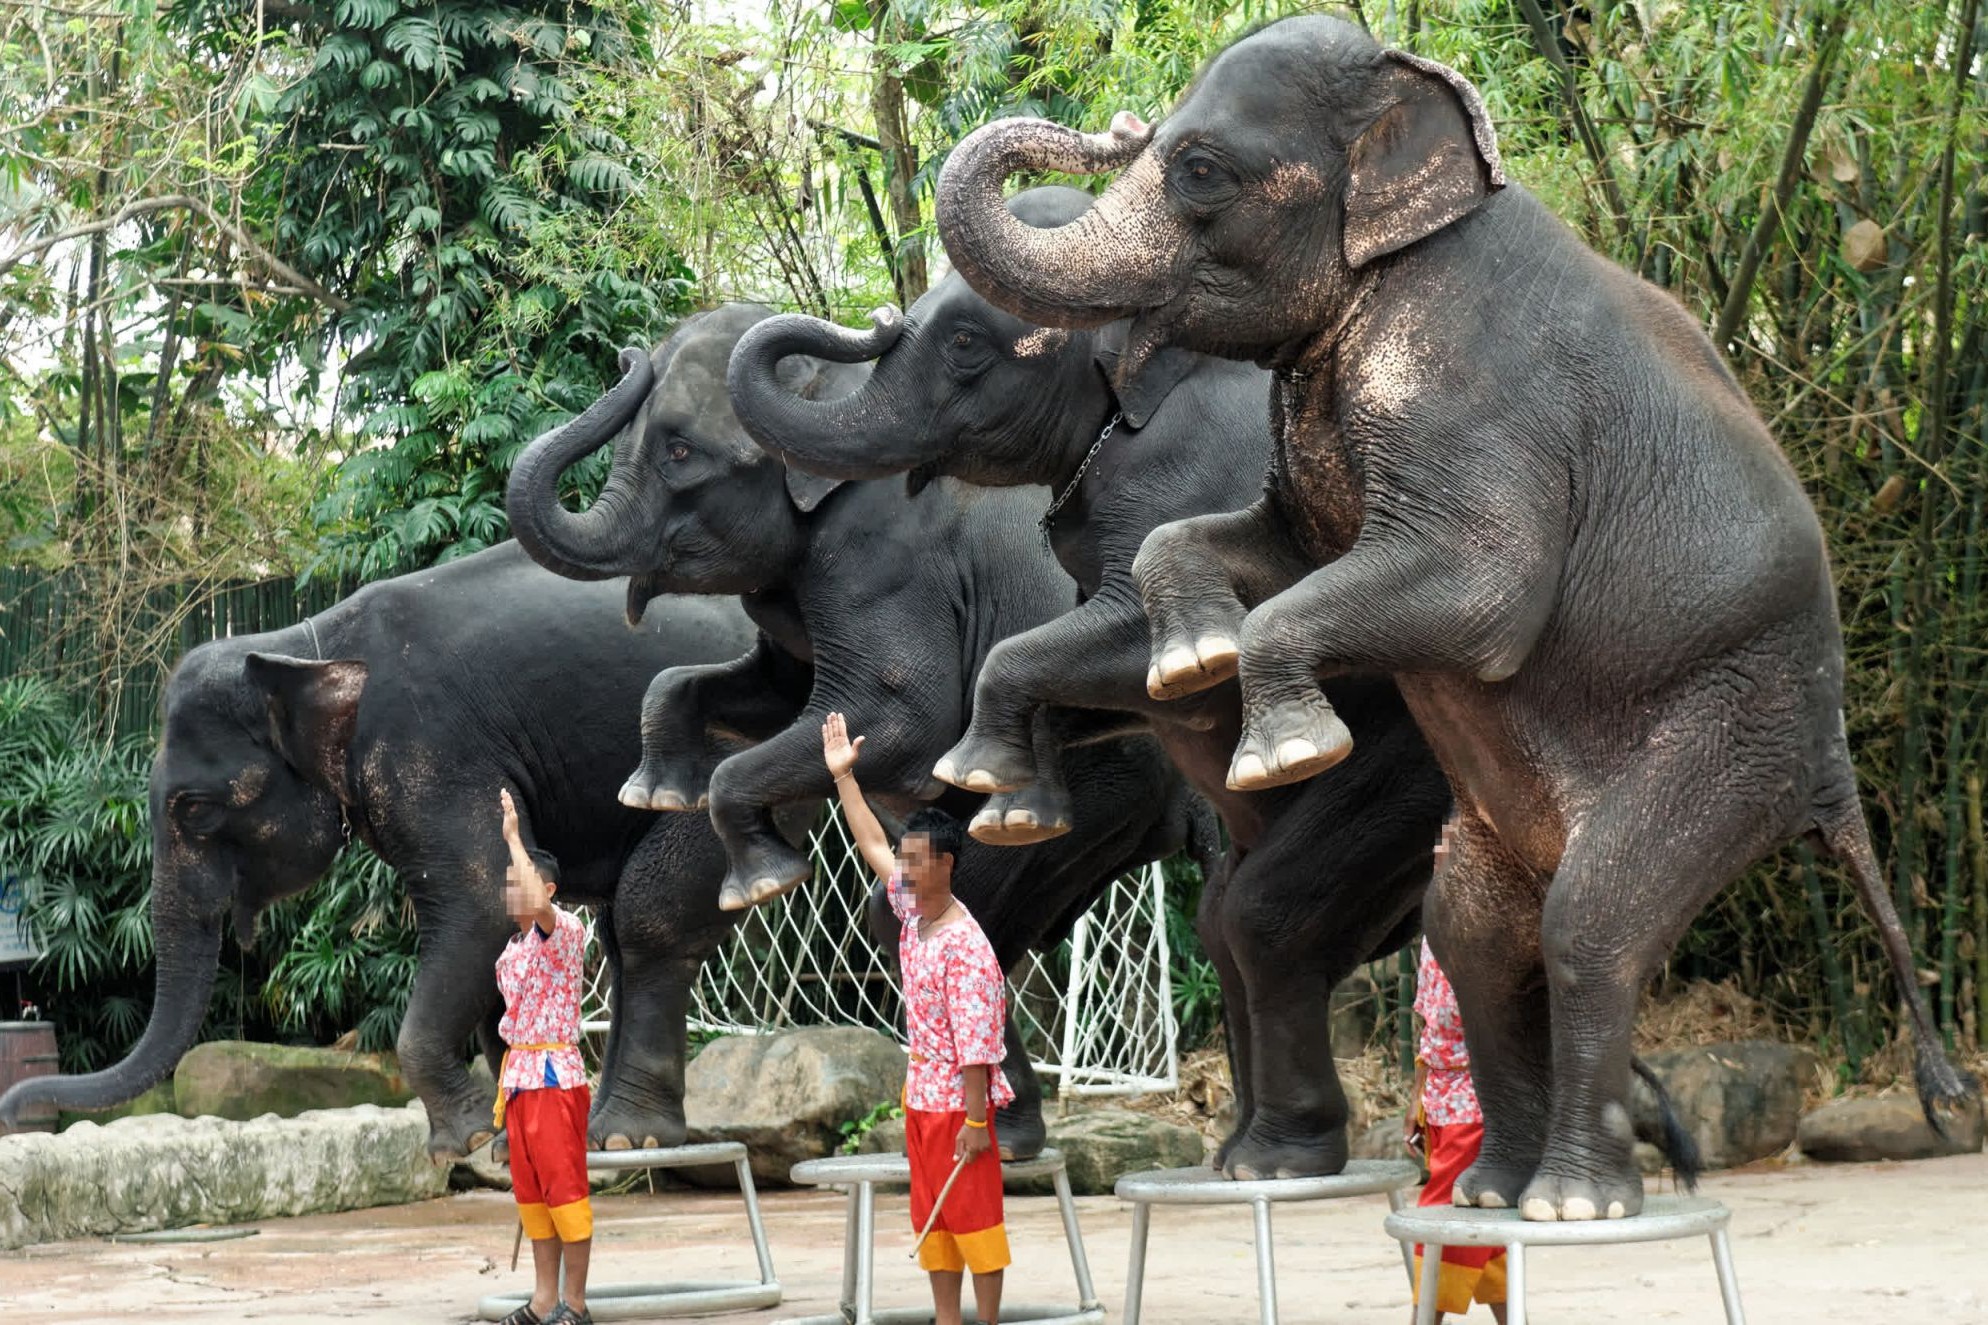 Elephants performing